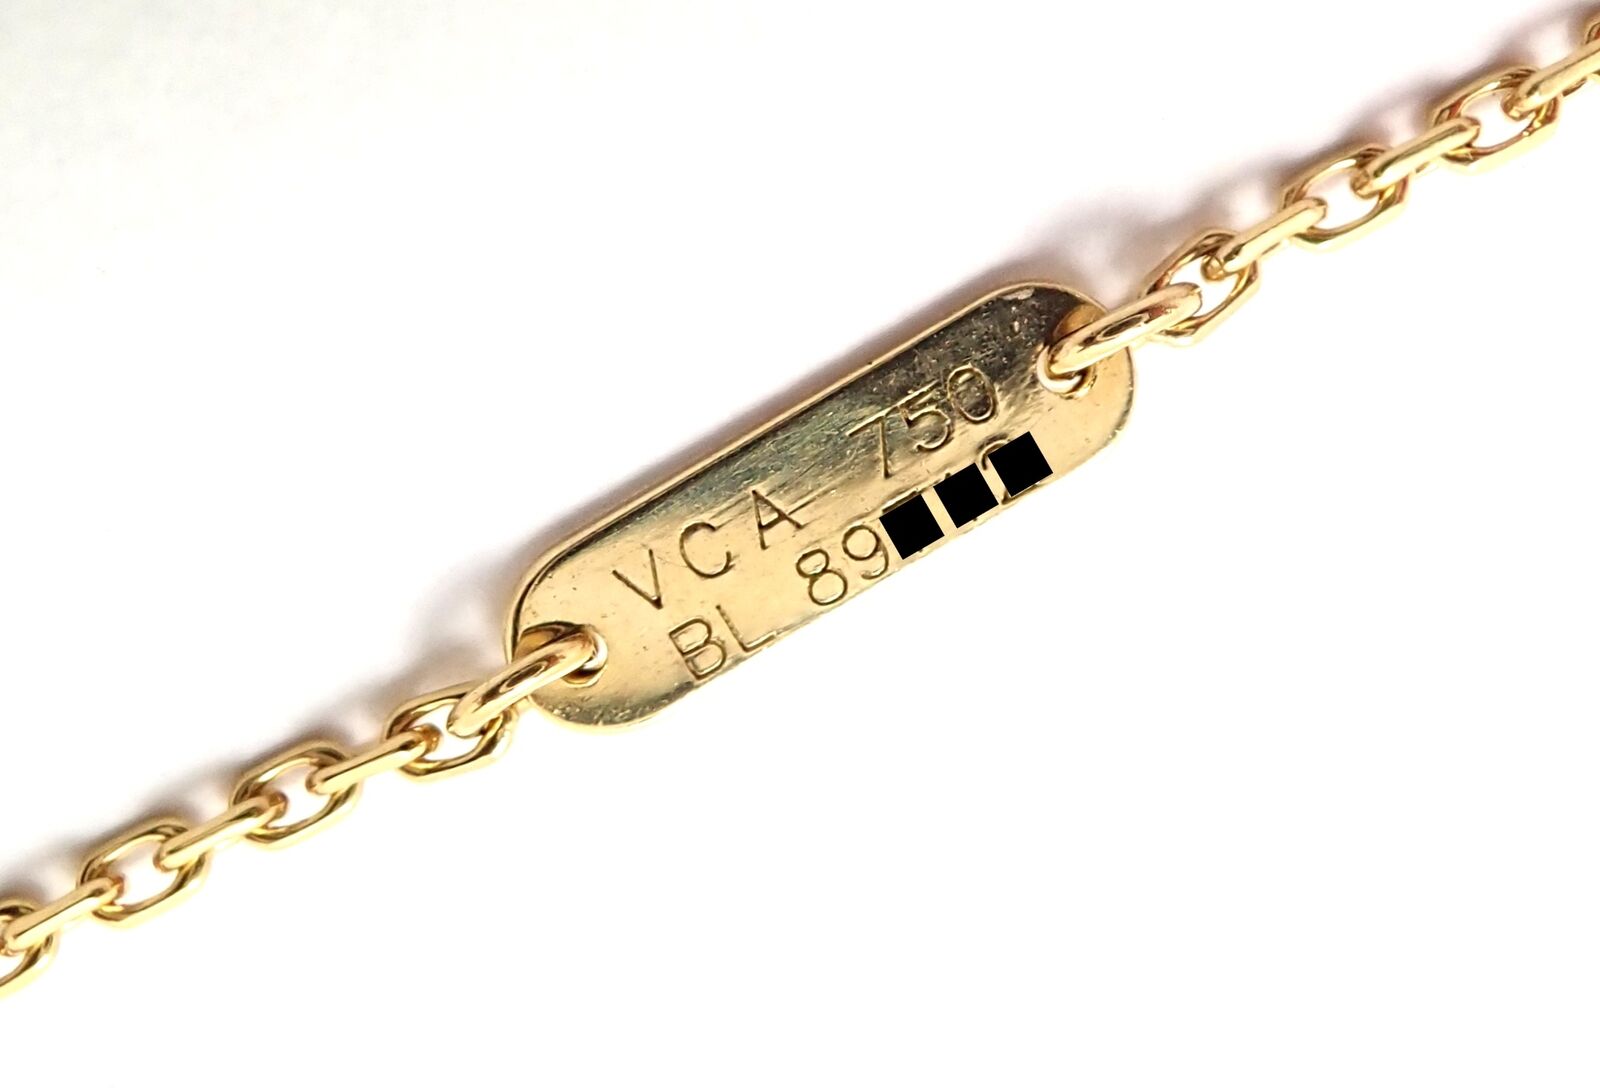 Van Cleef & Arpels Jewelry & Watches:Fine Jewelry:Necklaces & Pendants Authentic! Van Cleef & Arpels 18k Yellow Gold Diamond Button Pendant Necklace